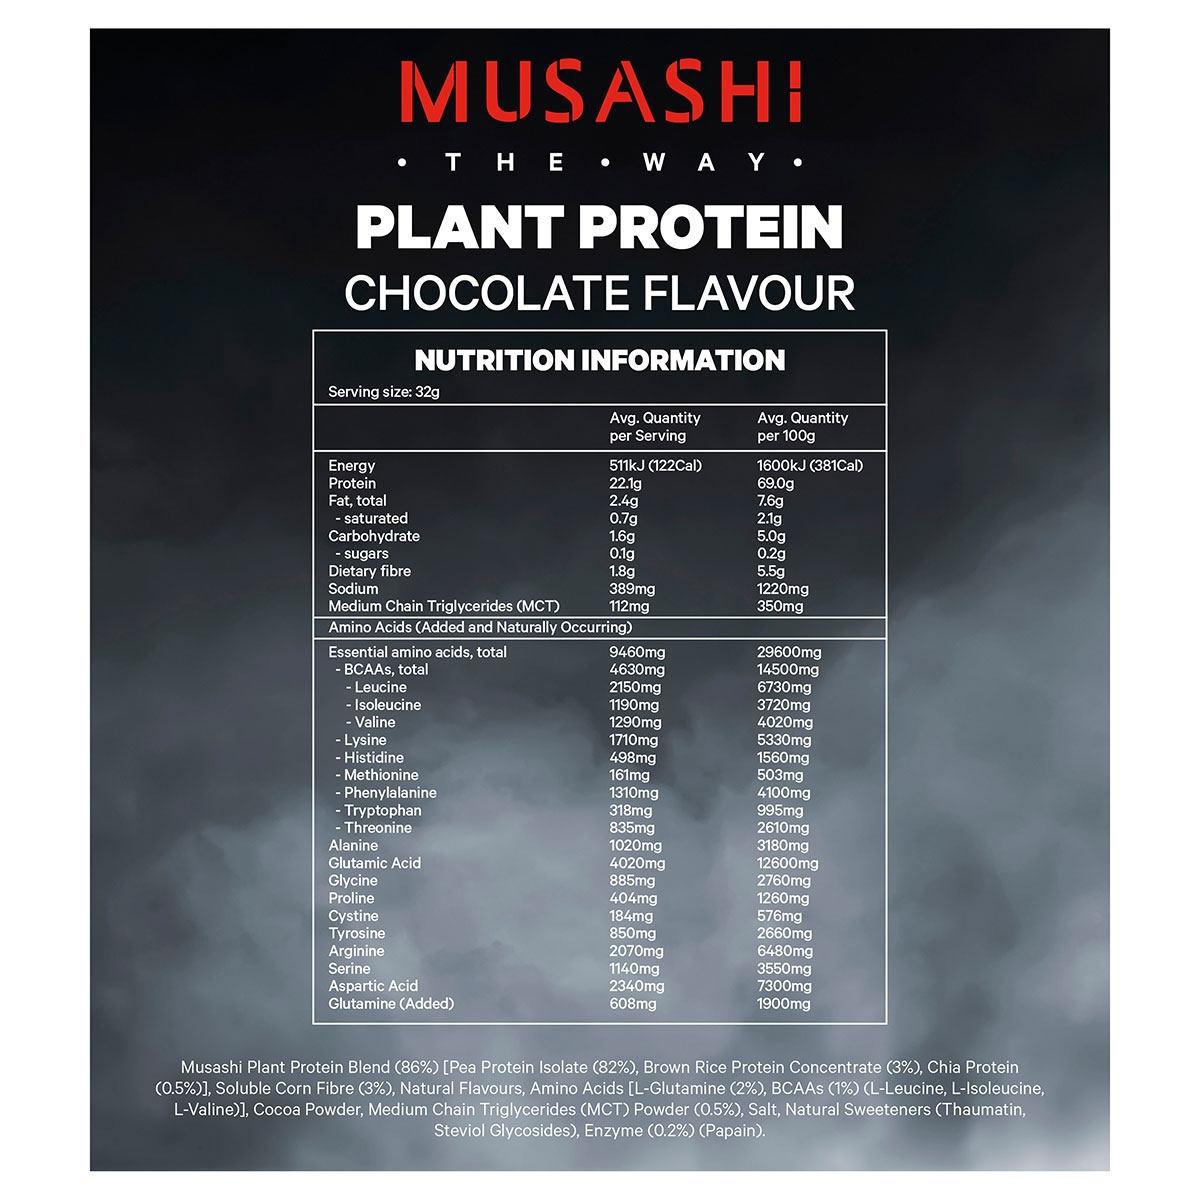 Musashi Plant Protein Powder Chocolate 2kg